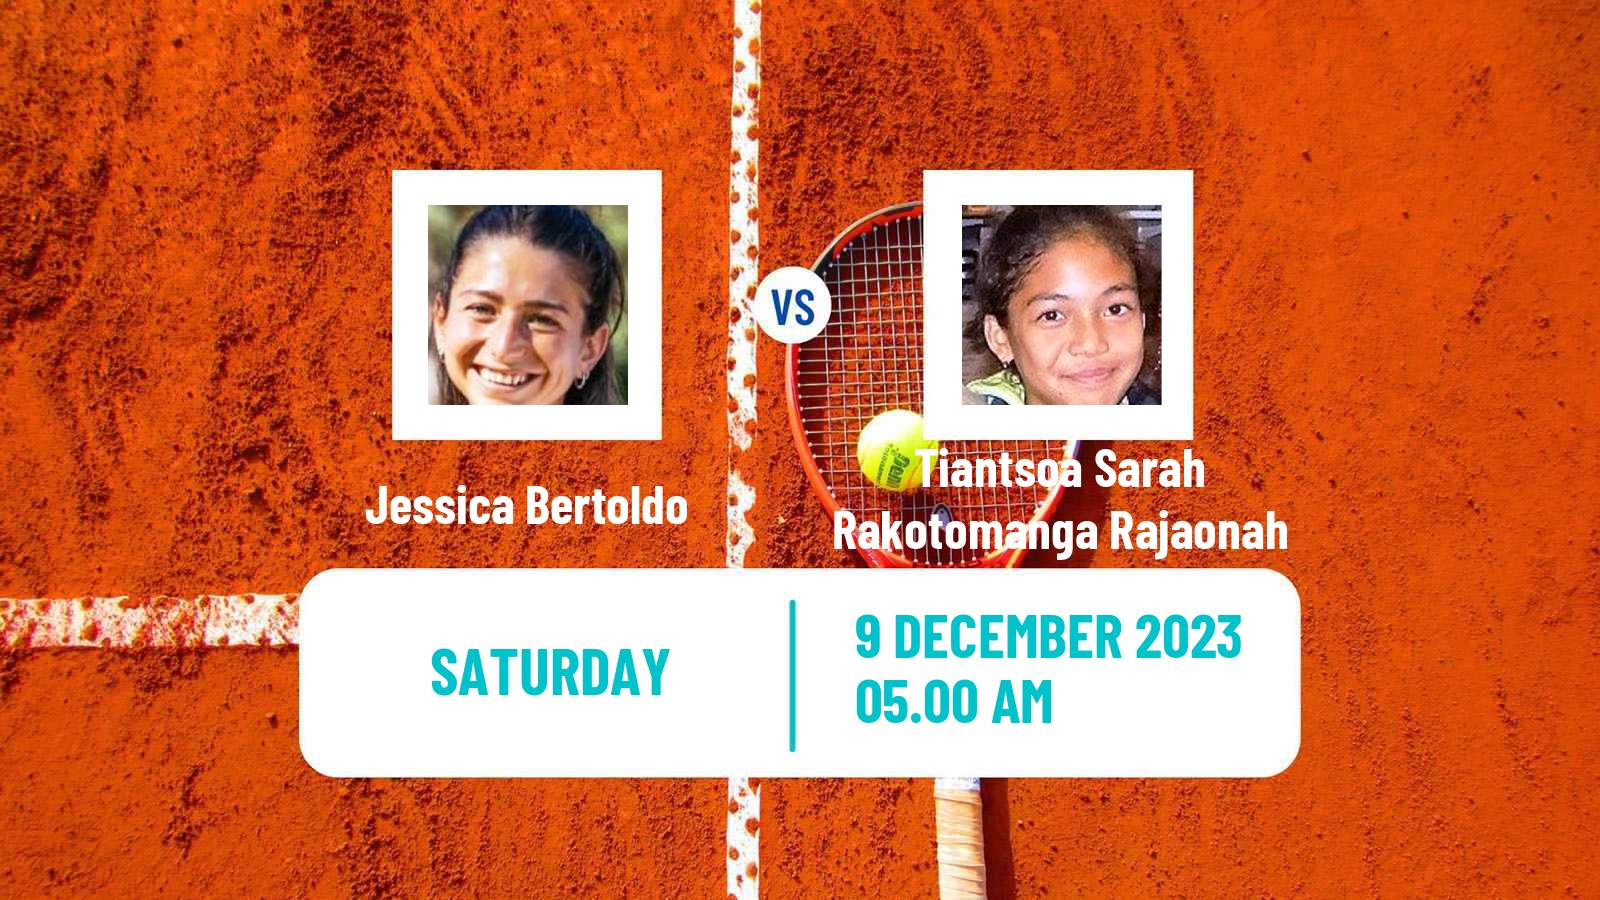 Tennis ITF W15 Valencia 2 Women Jessica Bertoldo - Tiantsoa Sarah Rakotomanga Rajaonah